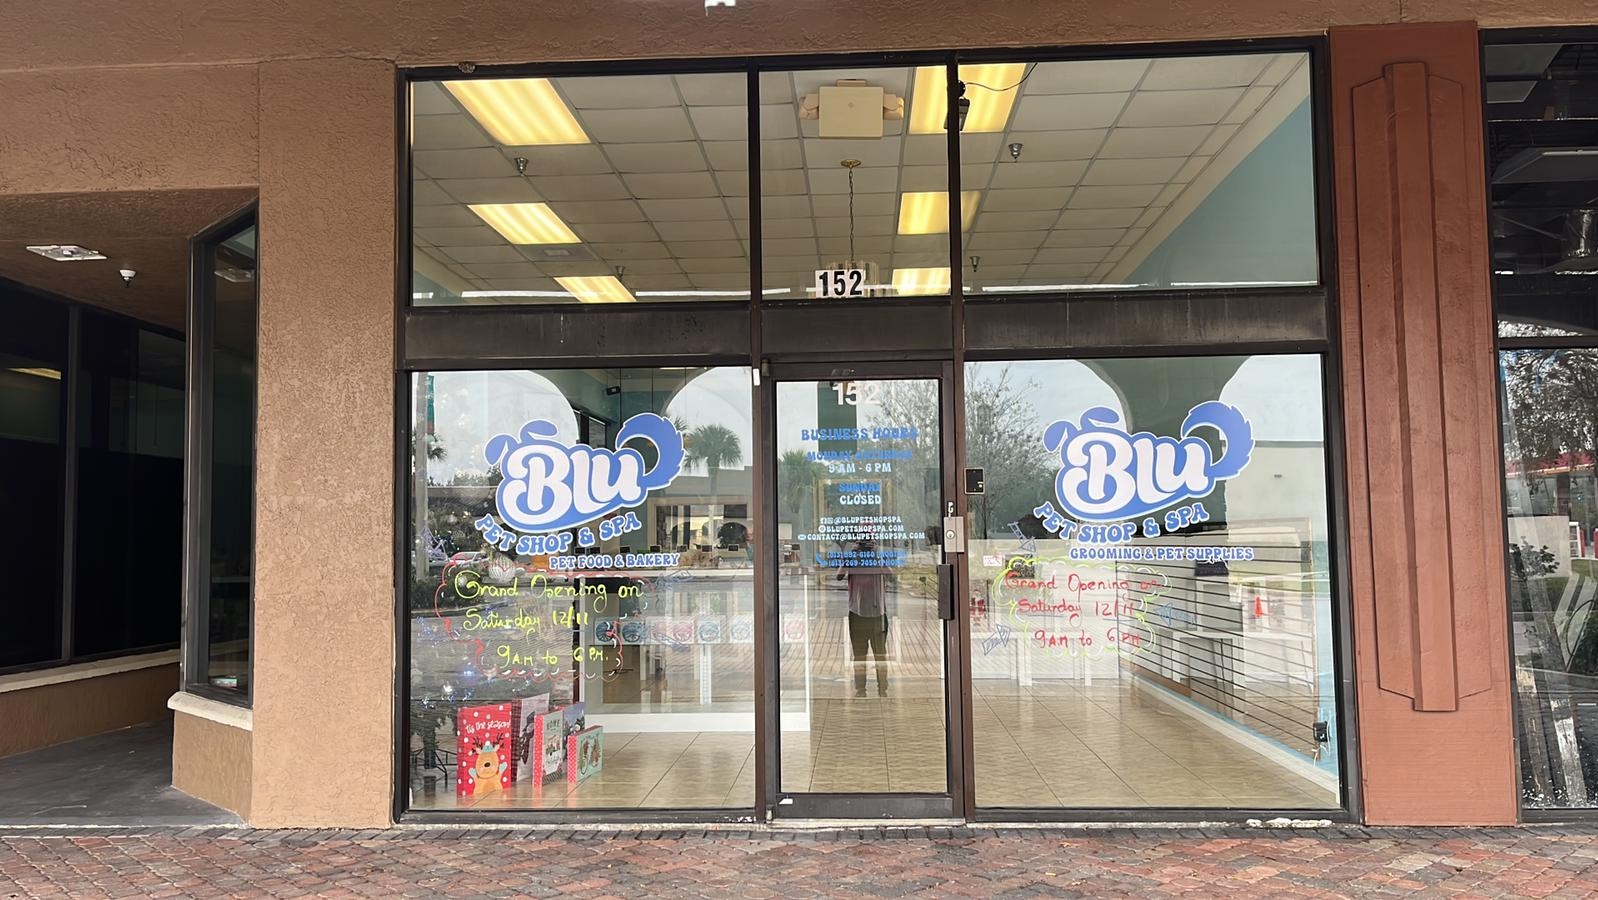 Blu Pet Shop & Spa